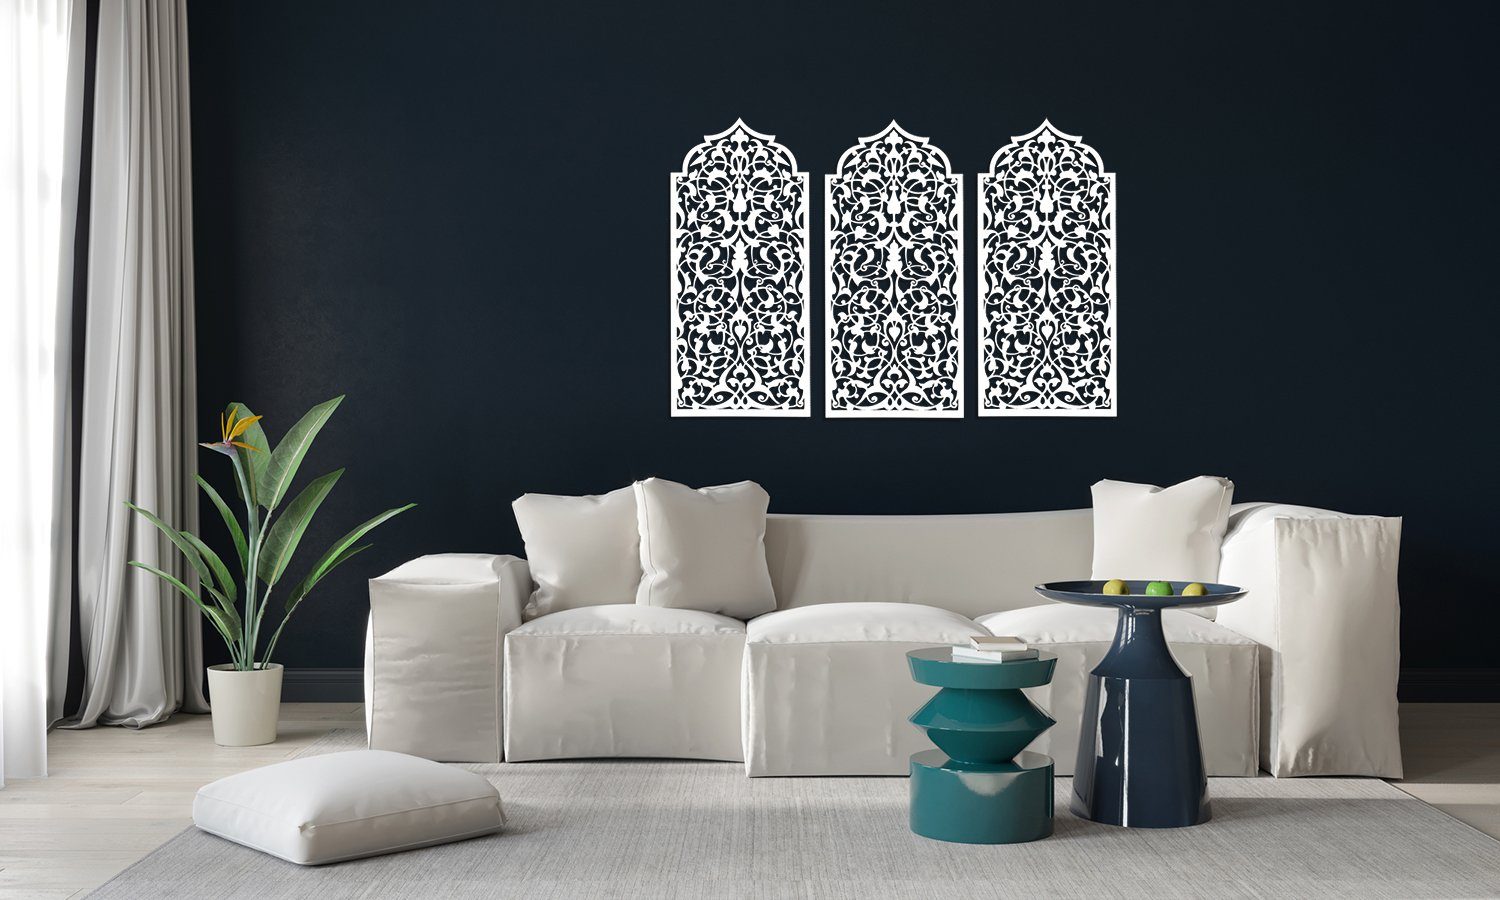 ORNAMENTI Holzbild 3D grosse Wandpaneel, Marokkanisches Fenster, Wanddekoration, Handwerk